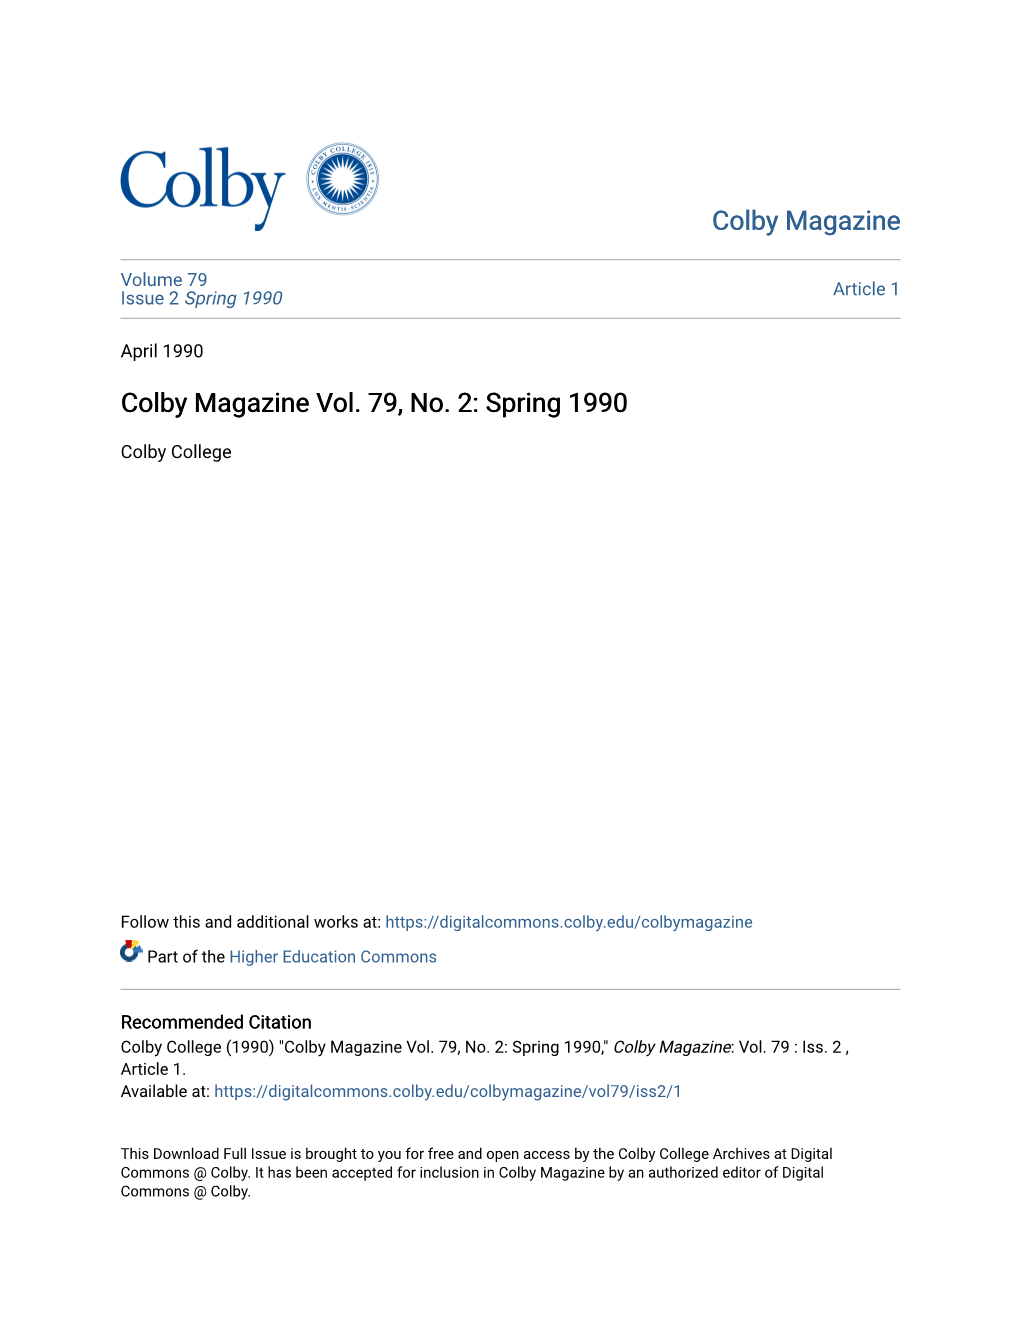 Colby Magazine Vol. 79, No. 2: Spring 1990